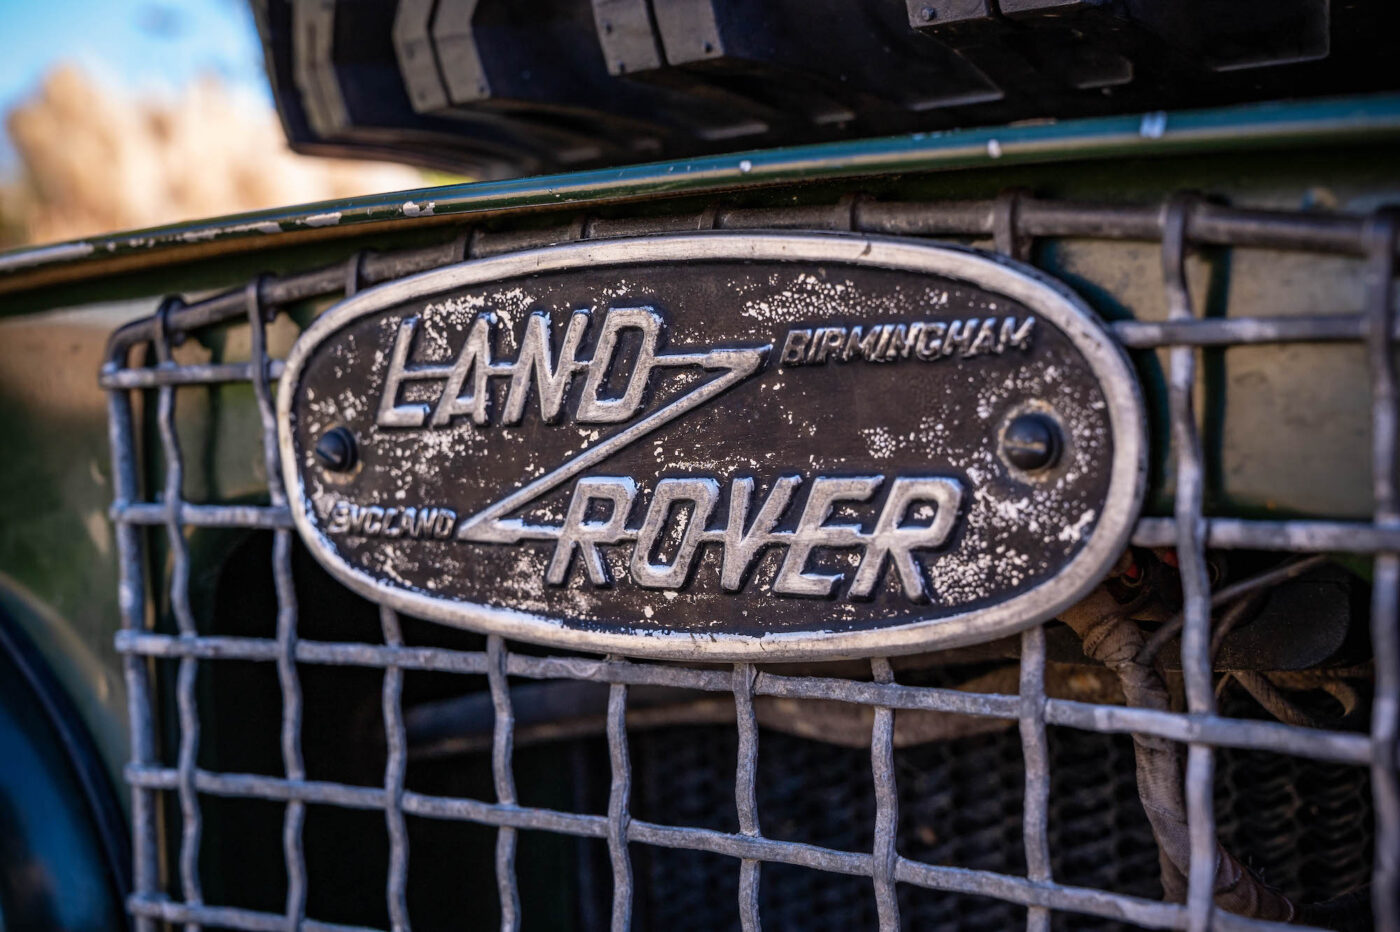 Land Rover 1955 badge